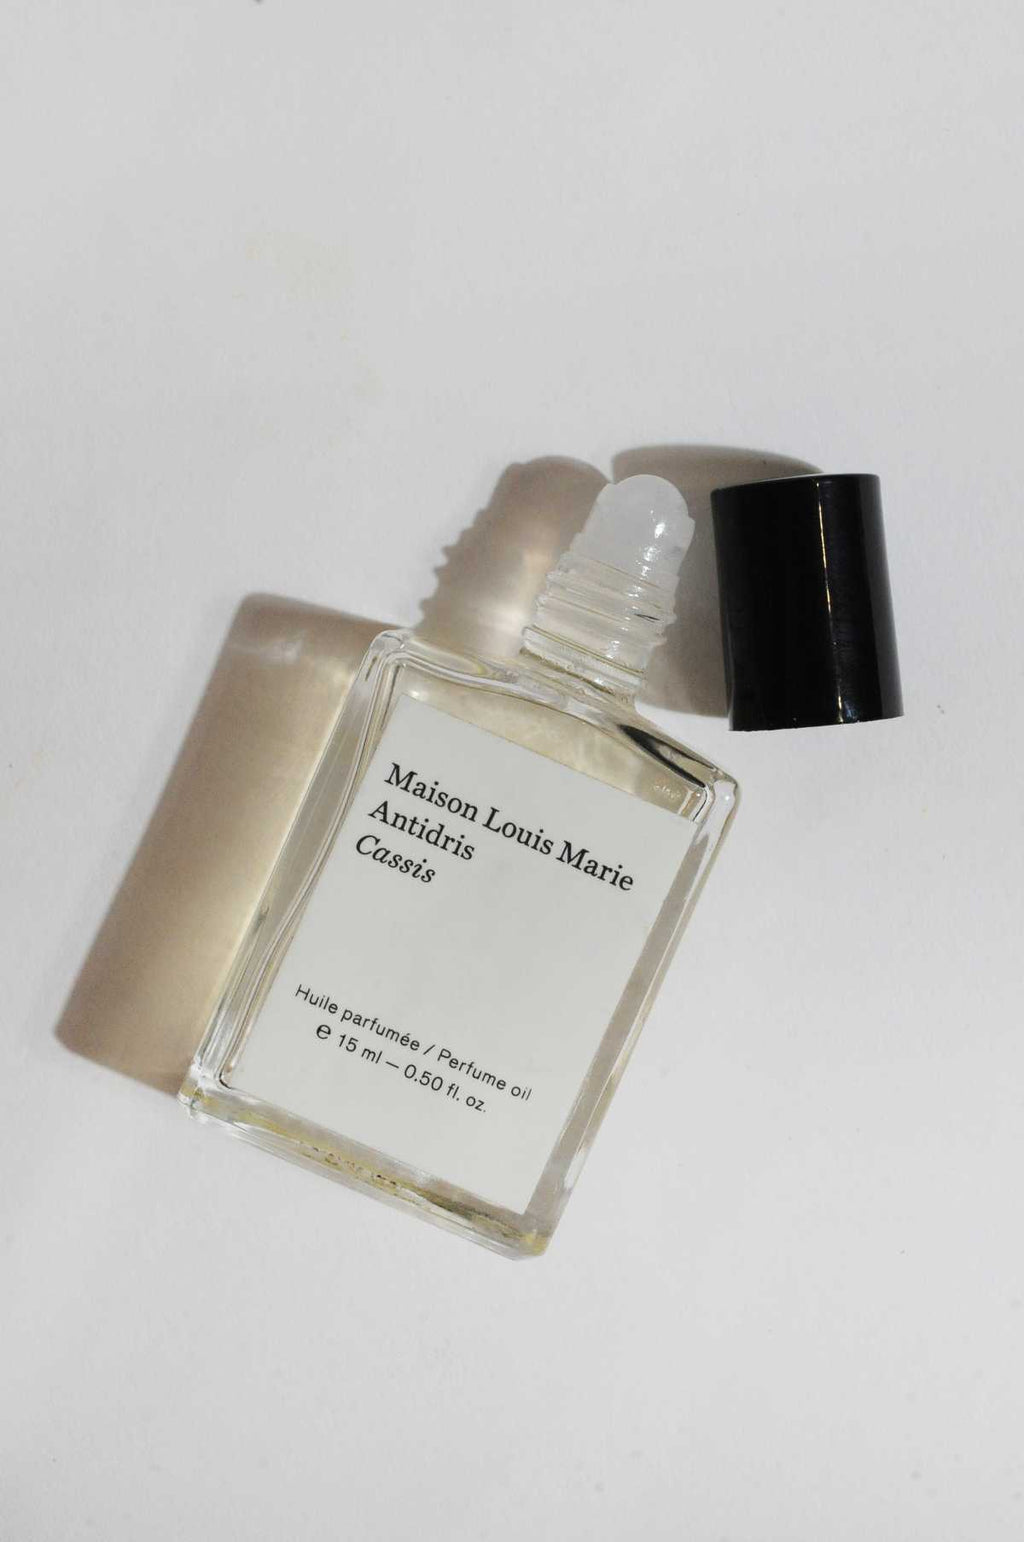 Maison Louis Marie Cassis Perfume Oil – The Hambledon